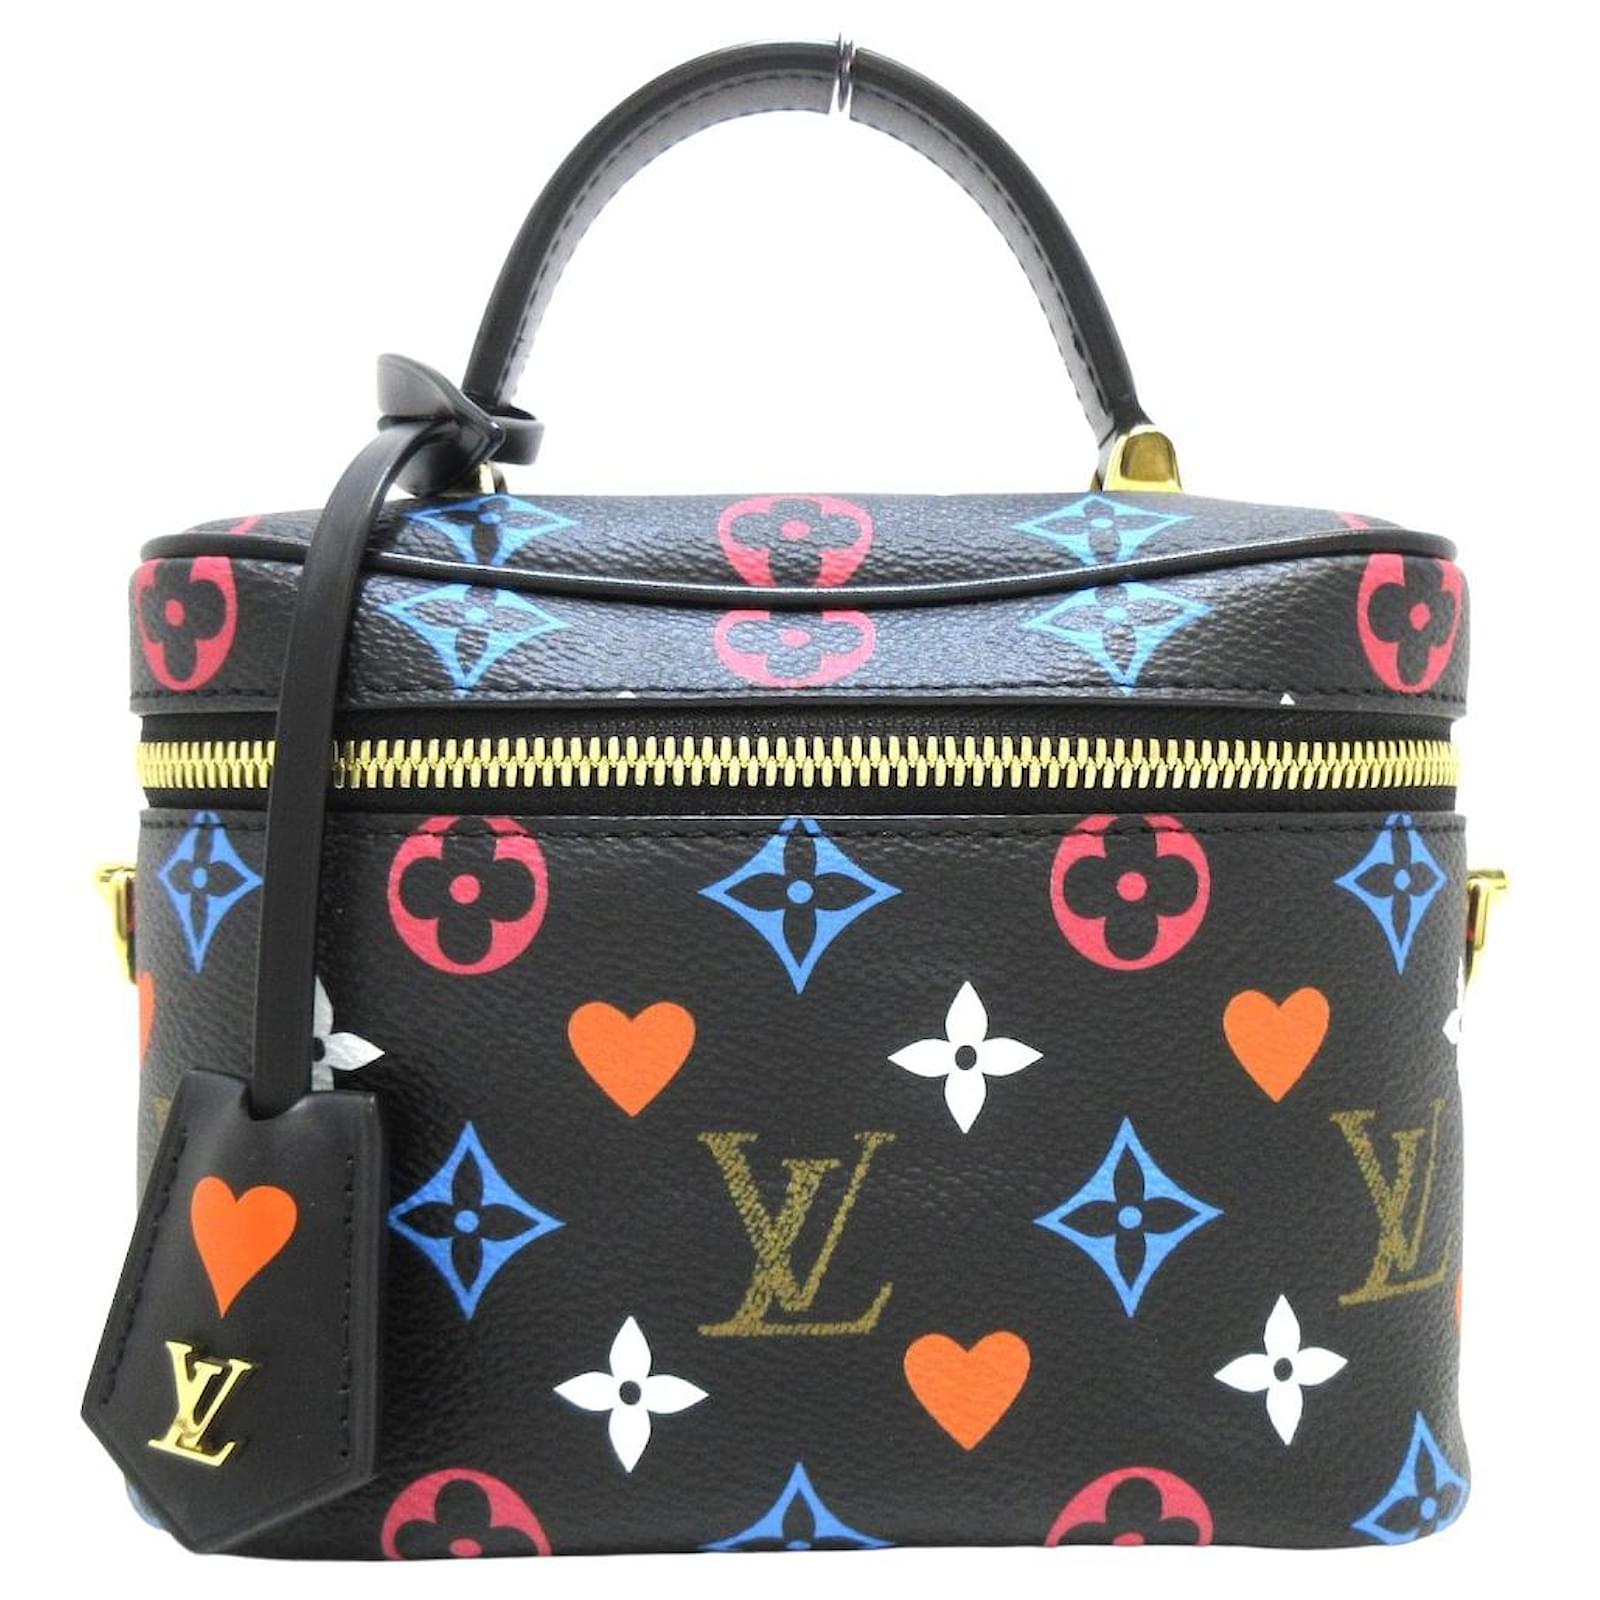 Louis Vuitton Small Dust Bag  Bags, Louis vuitton, Louis vuitton